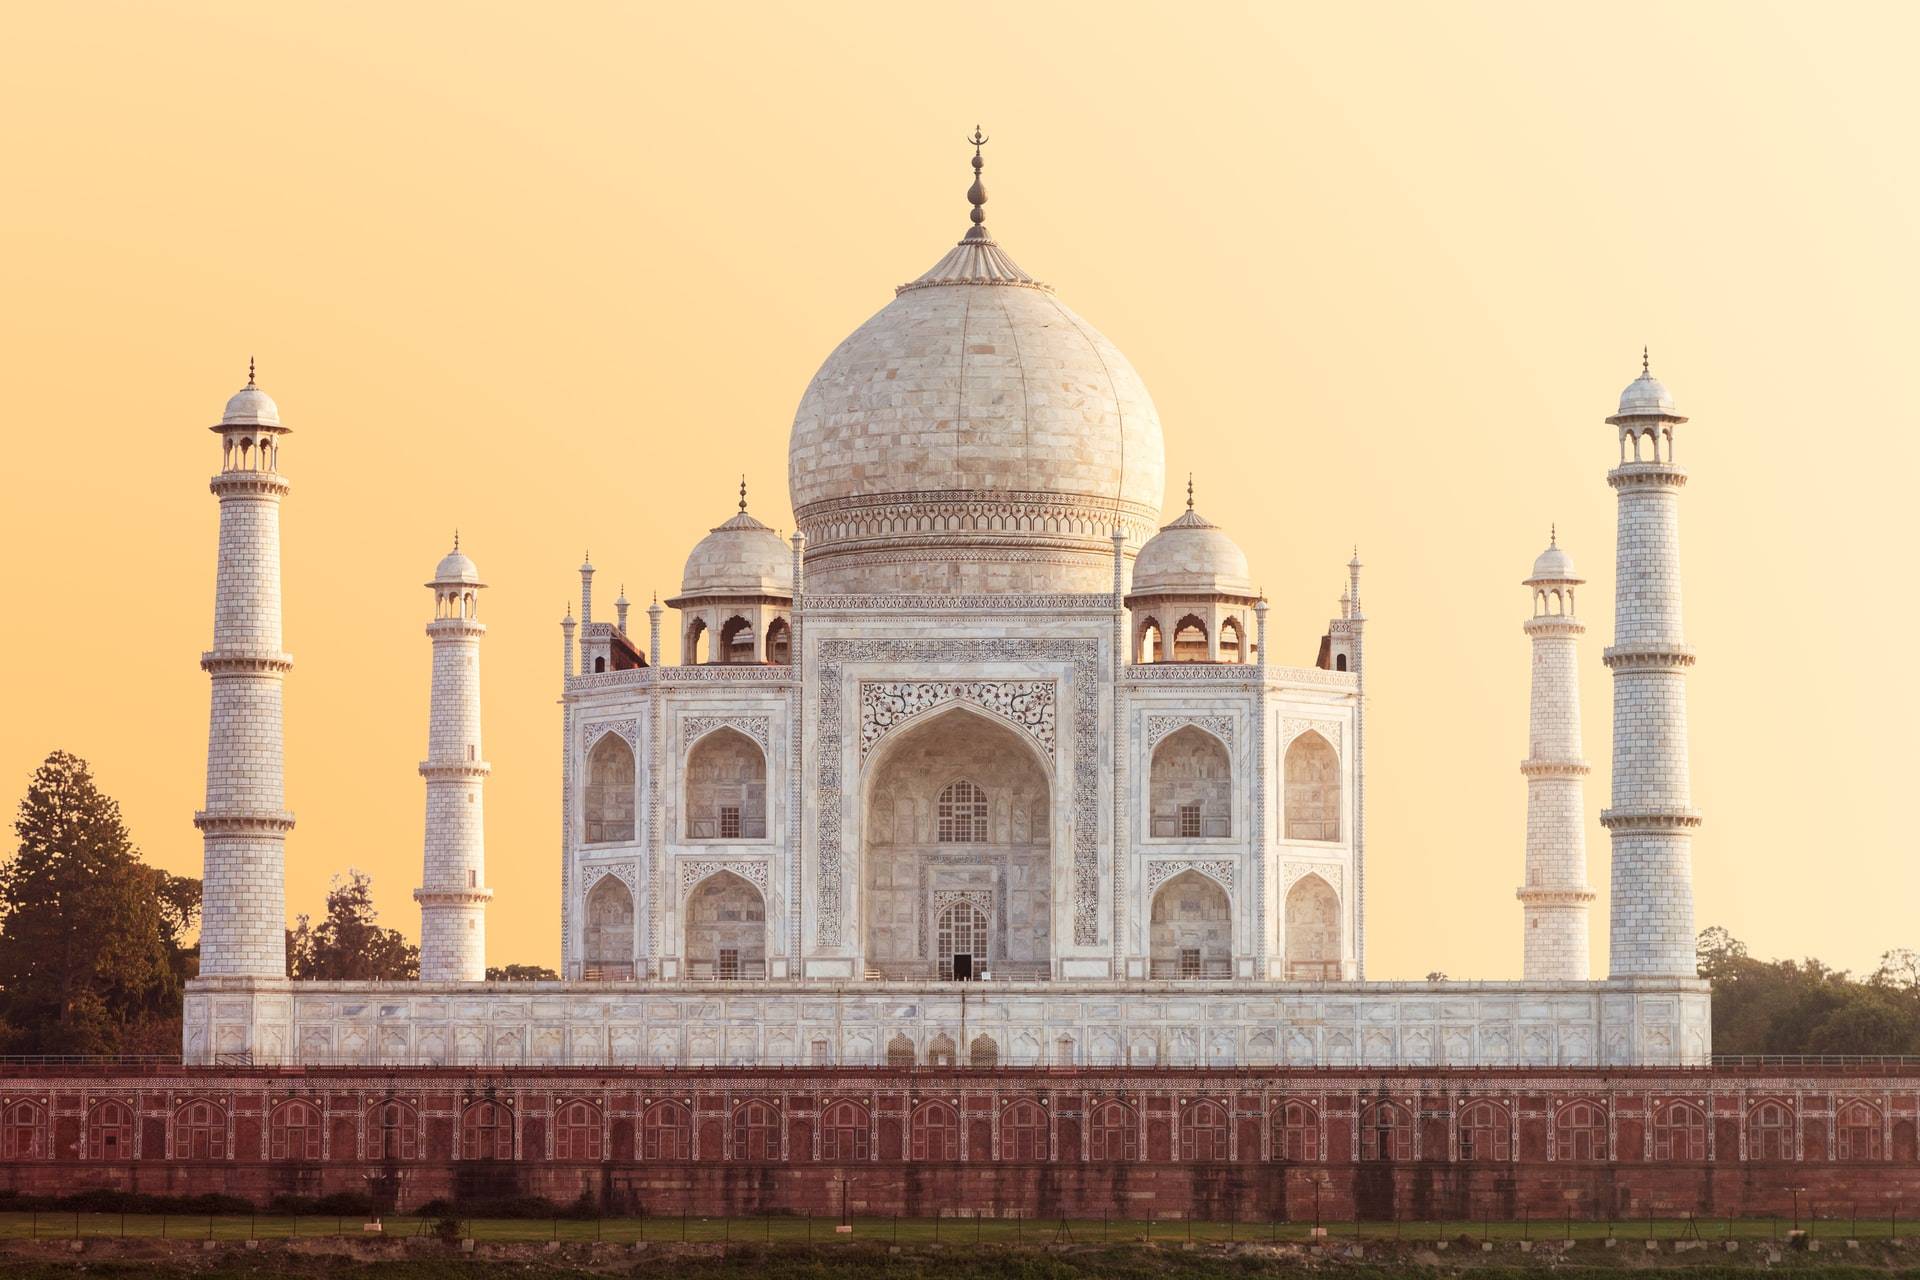  Taj Mahal, Agra, India – Heritage site since 1983